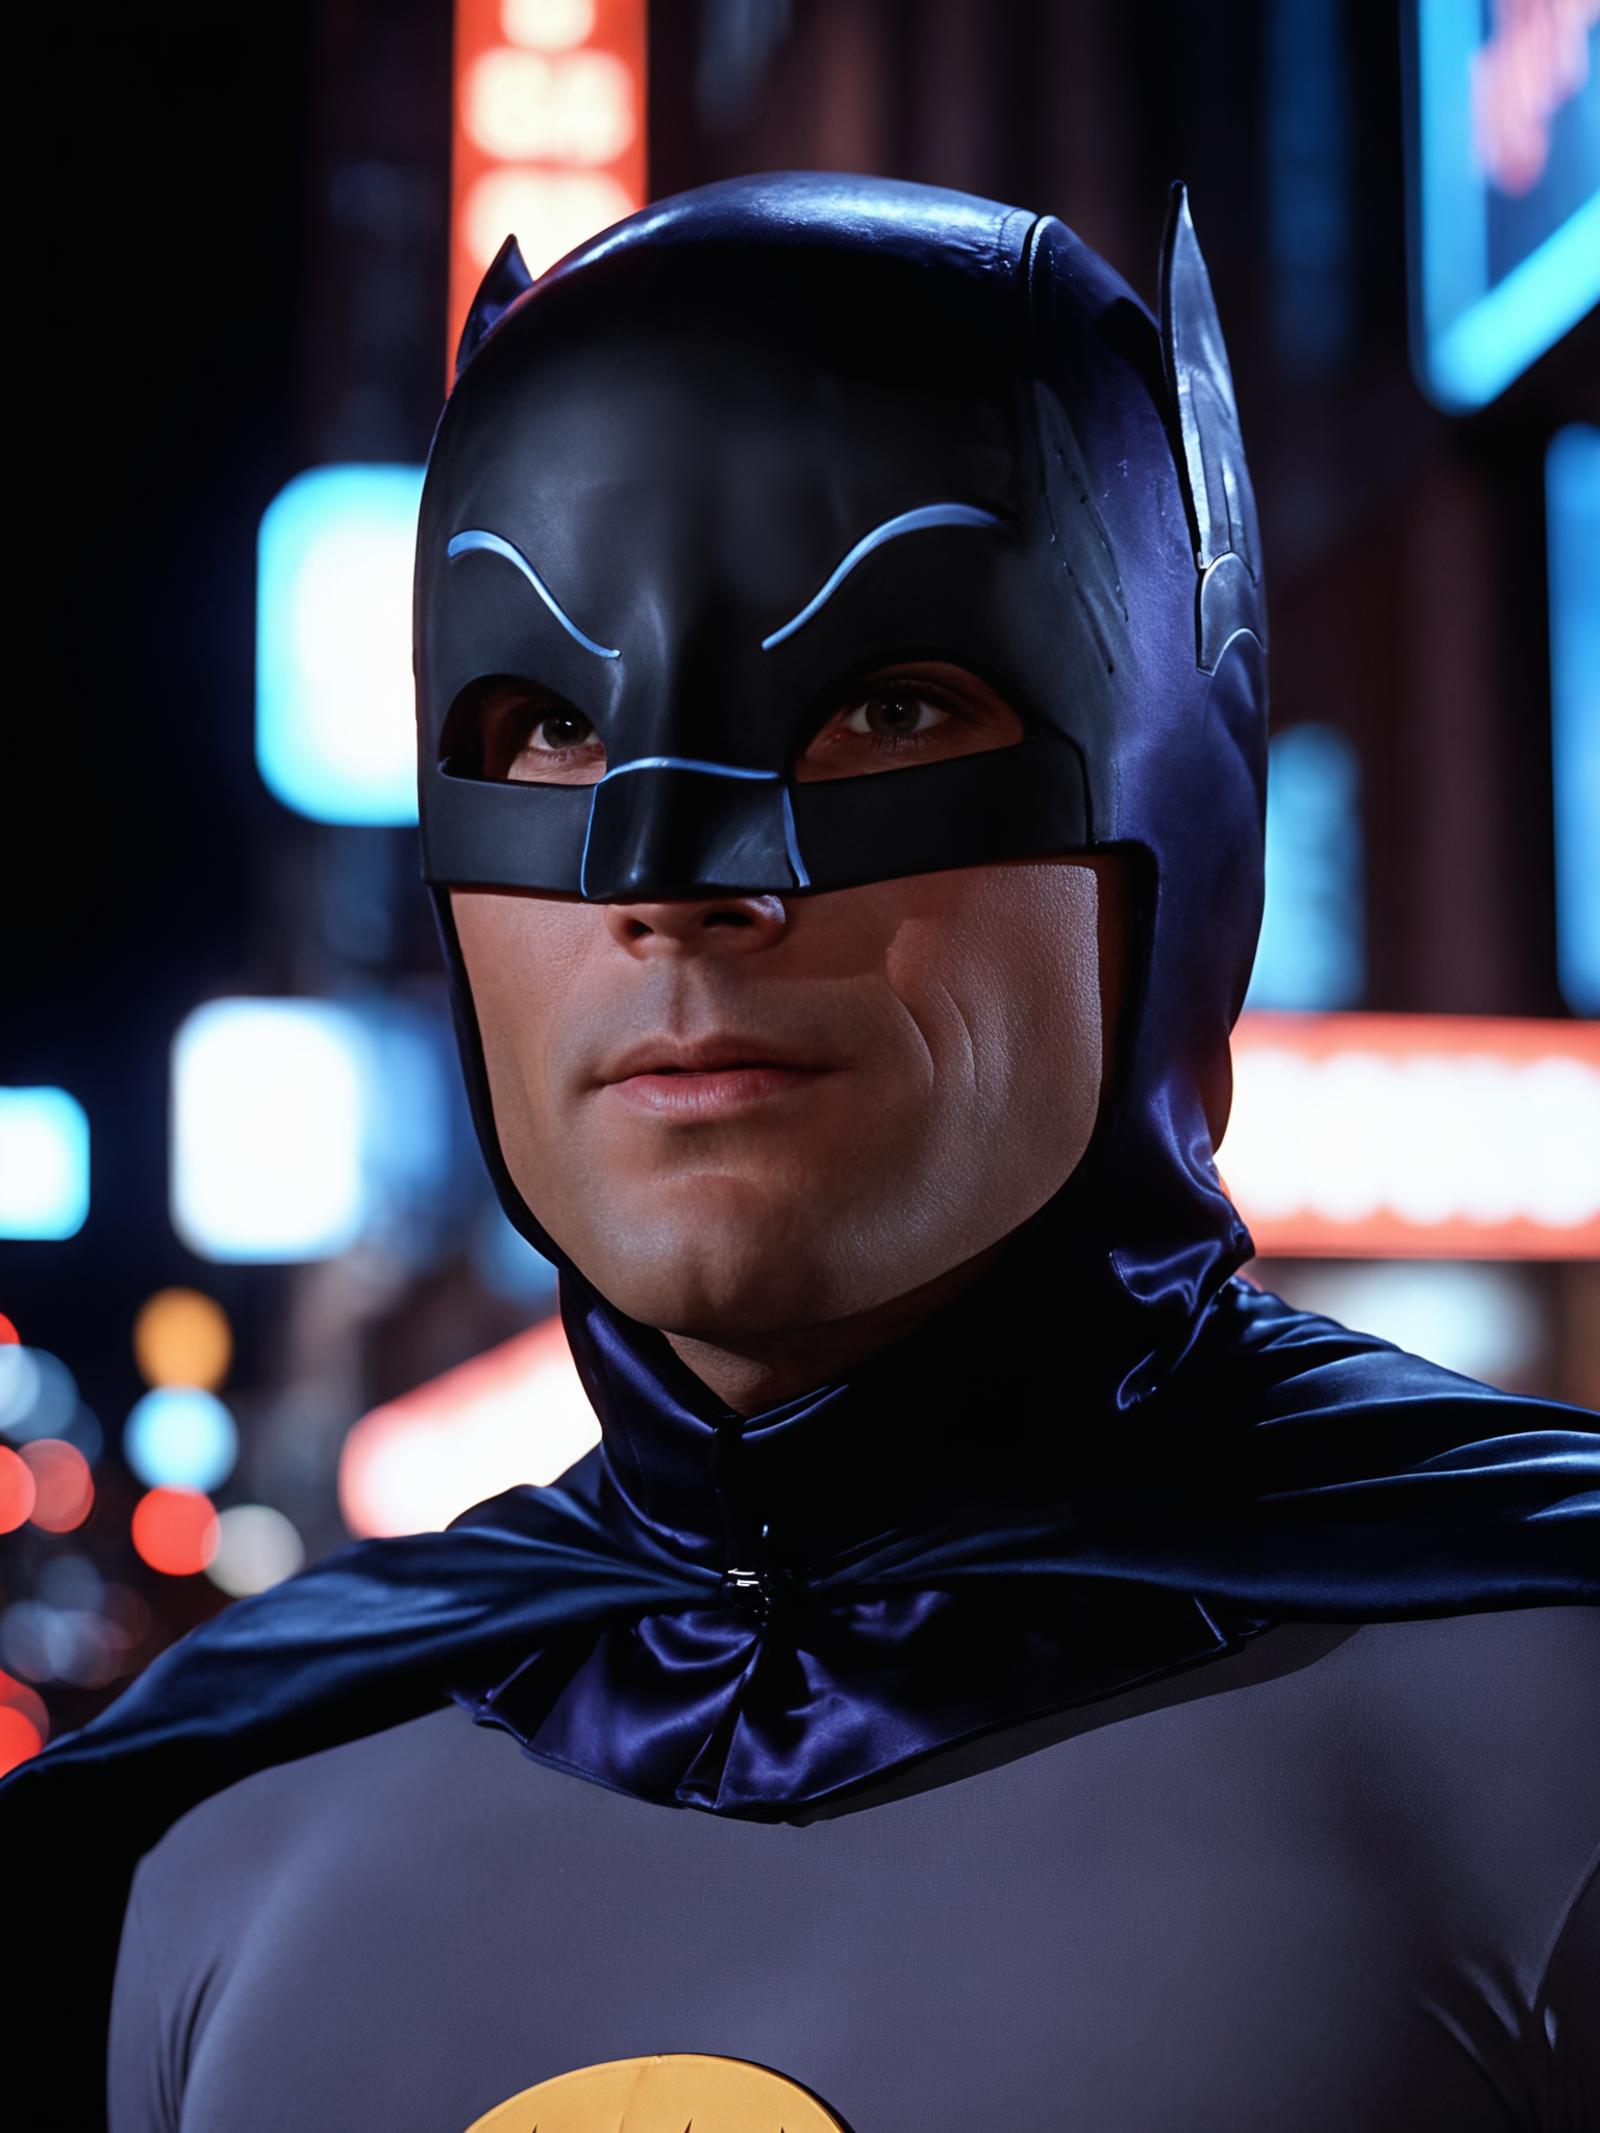 Adam West Batman image by thesilvermoth